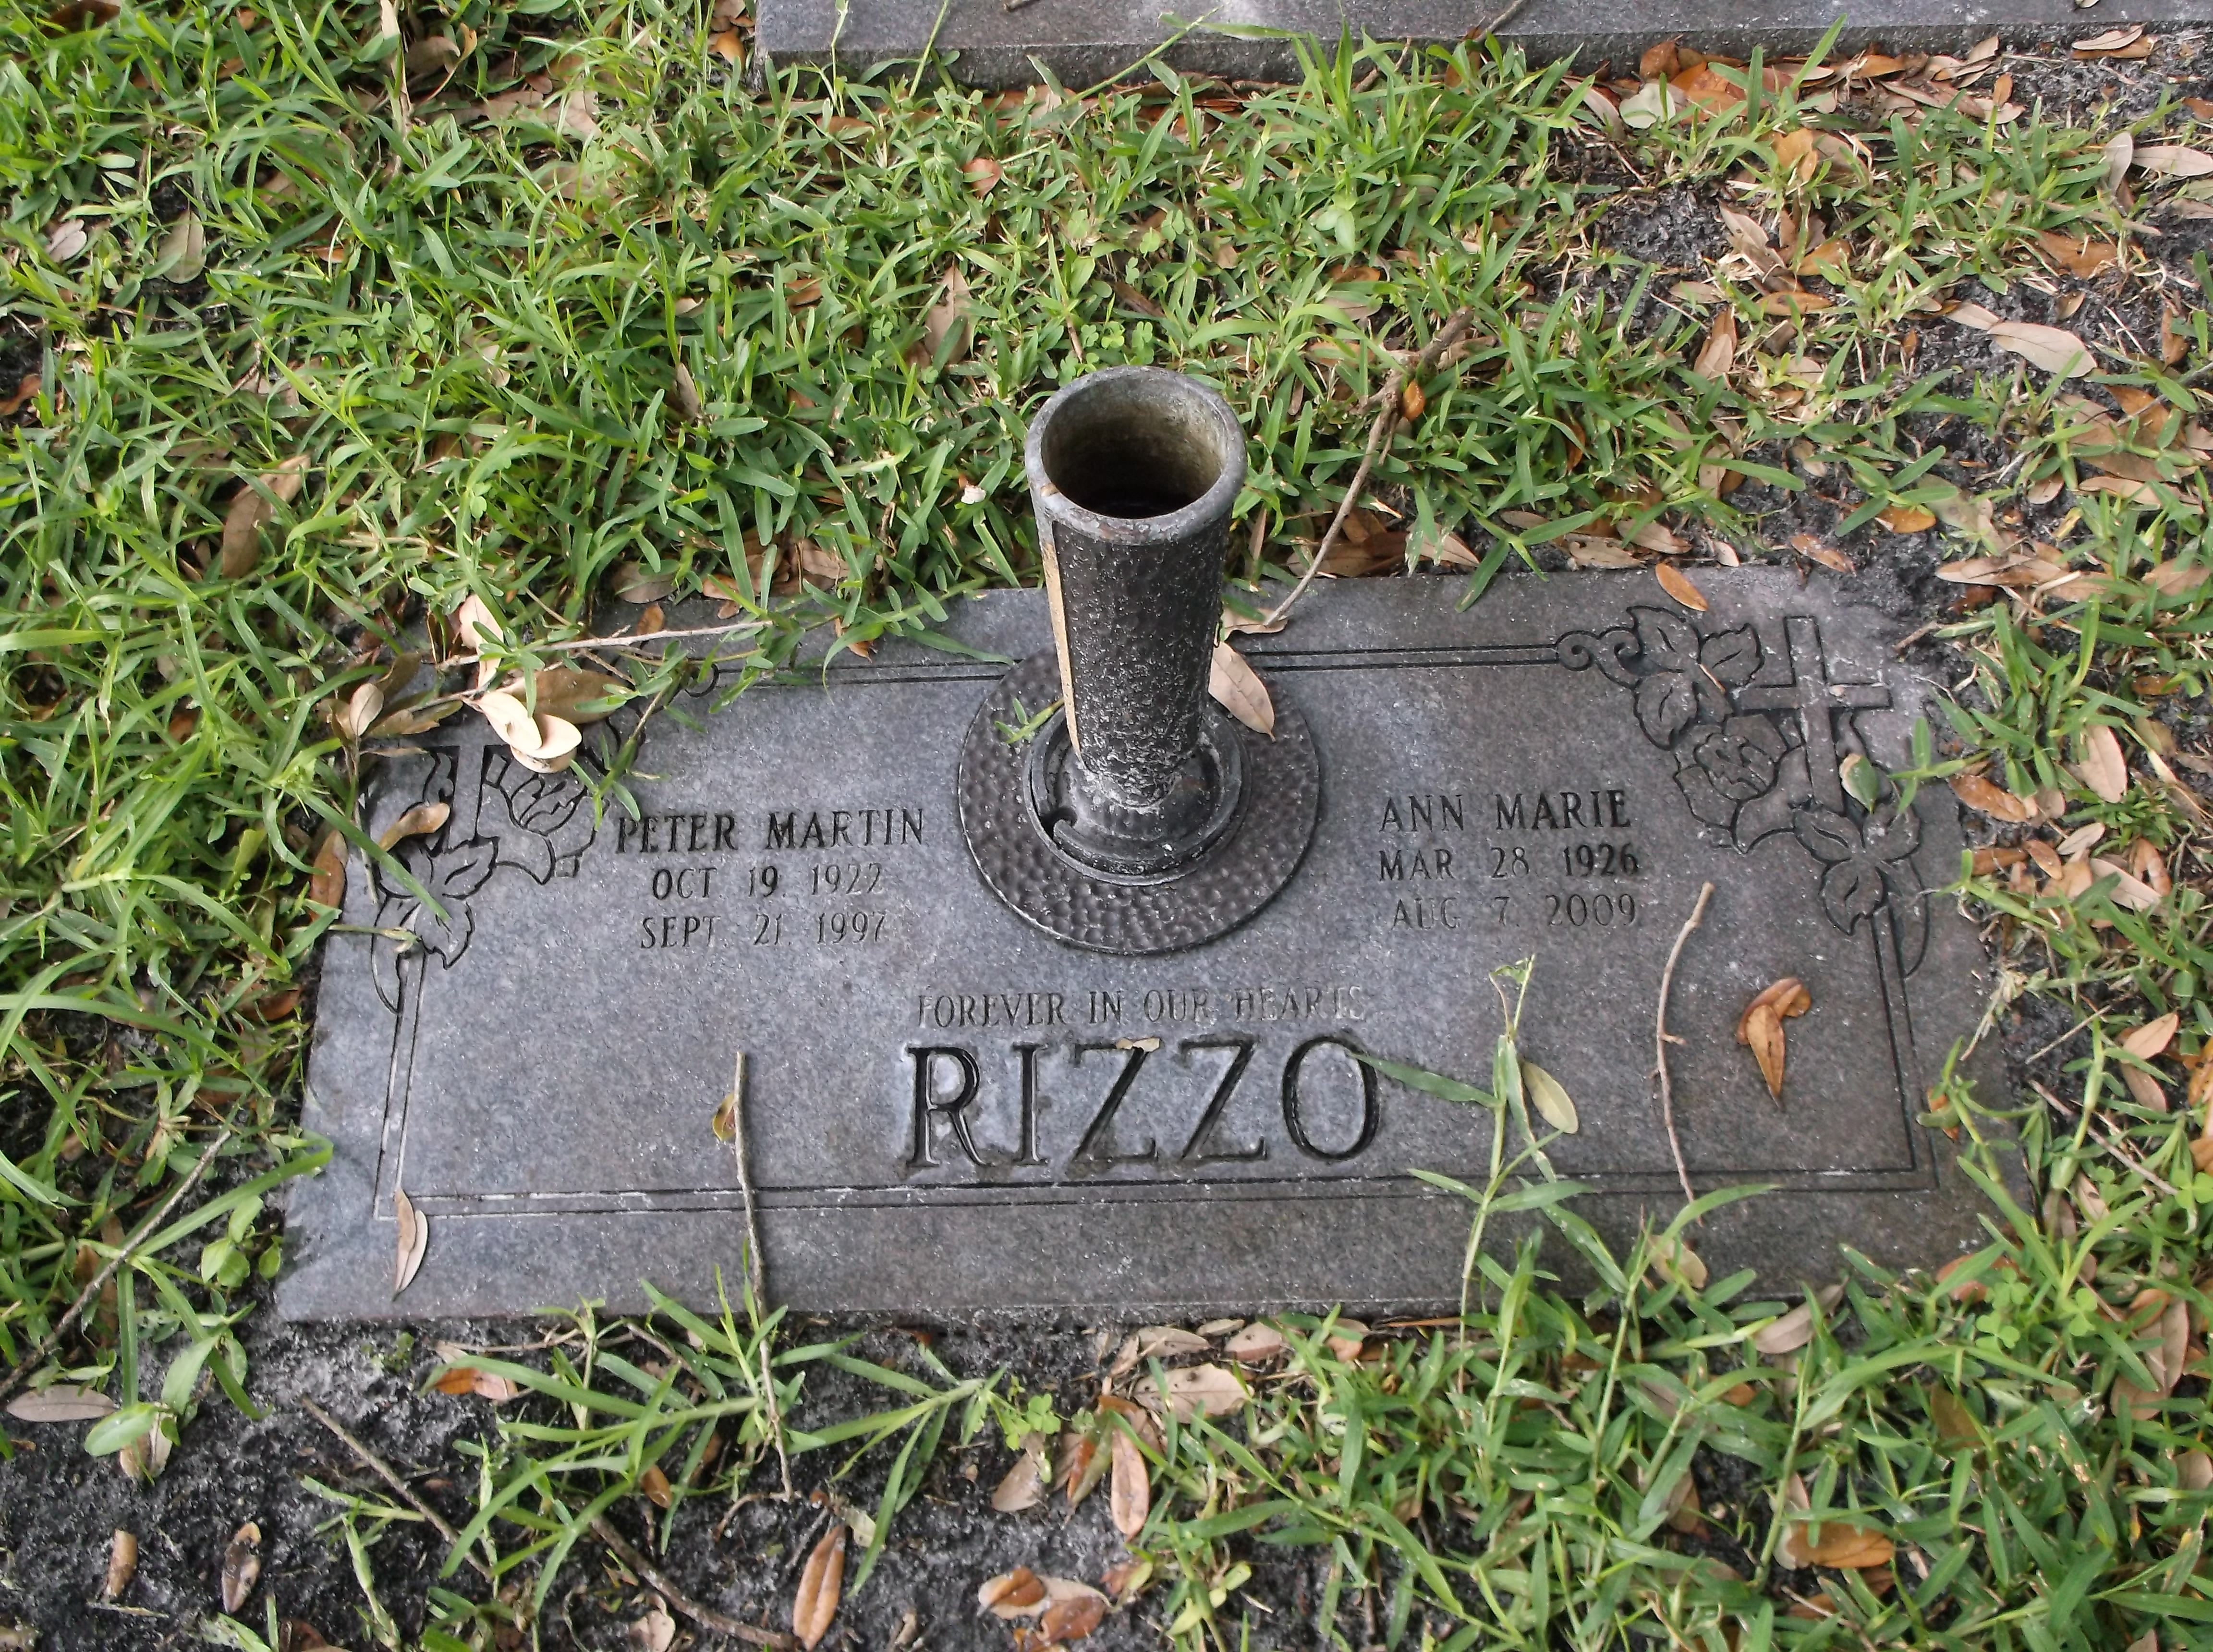 Peter Martin Rizzo